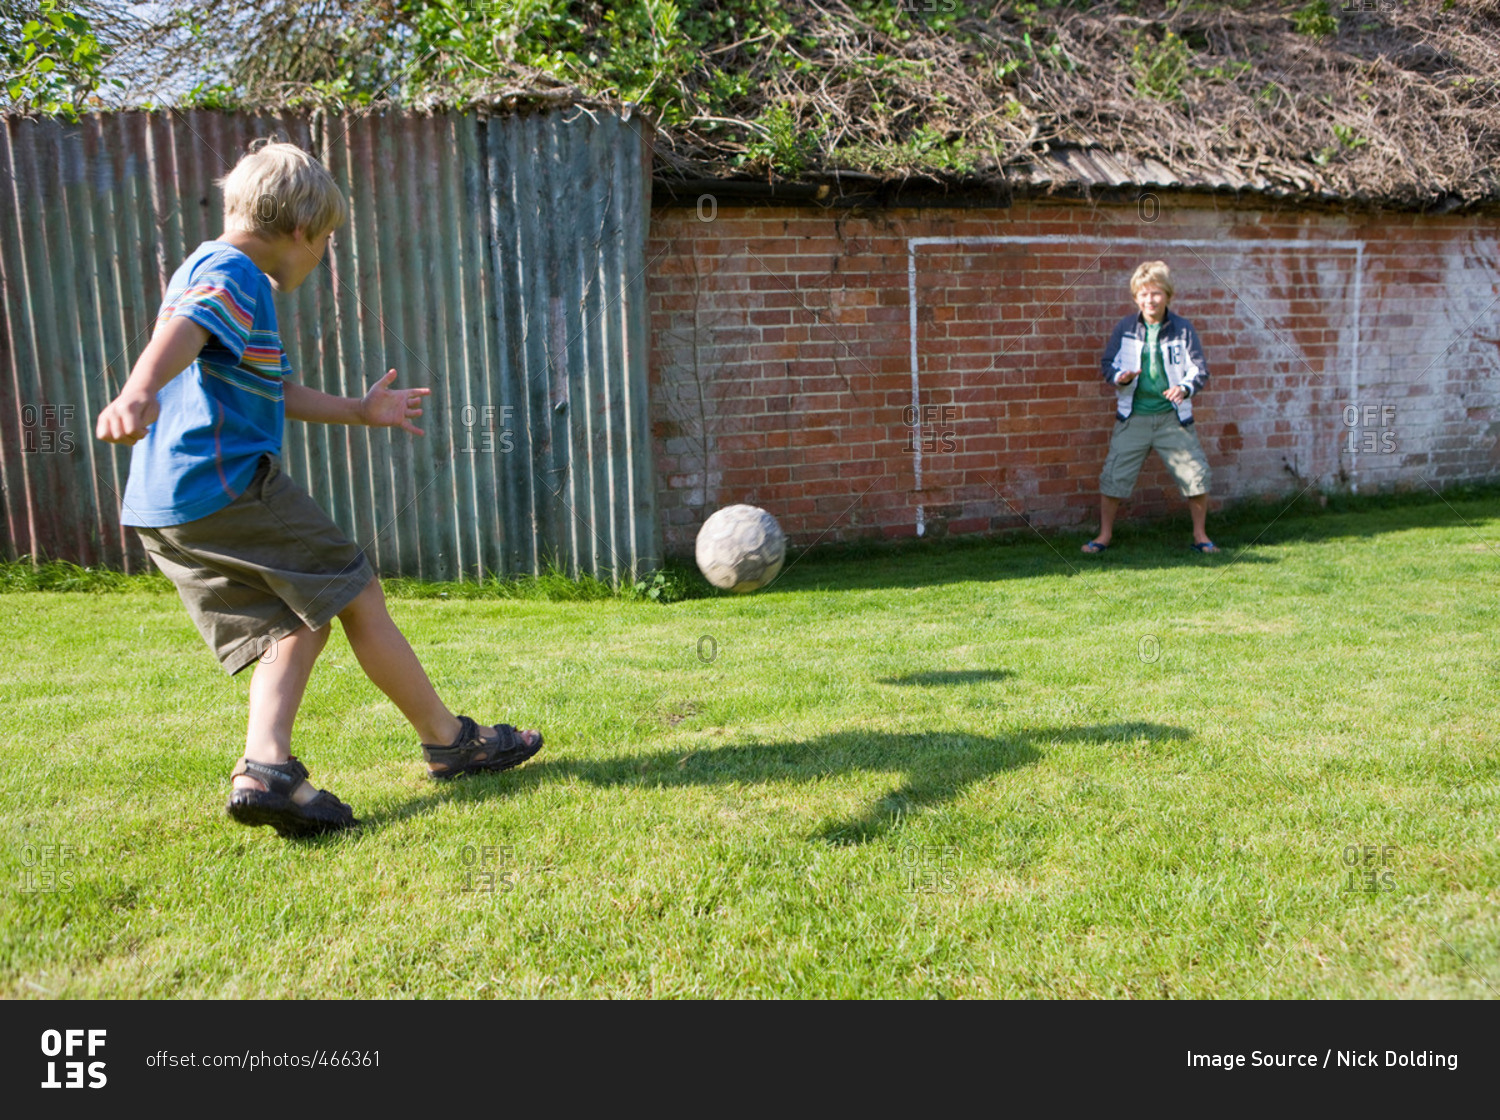 Child footballer shooting at goal